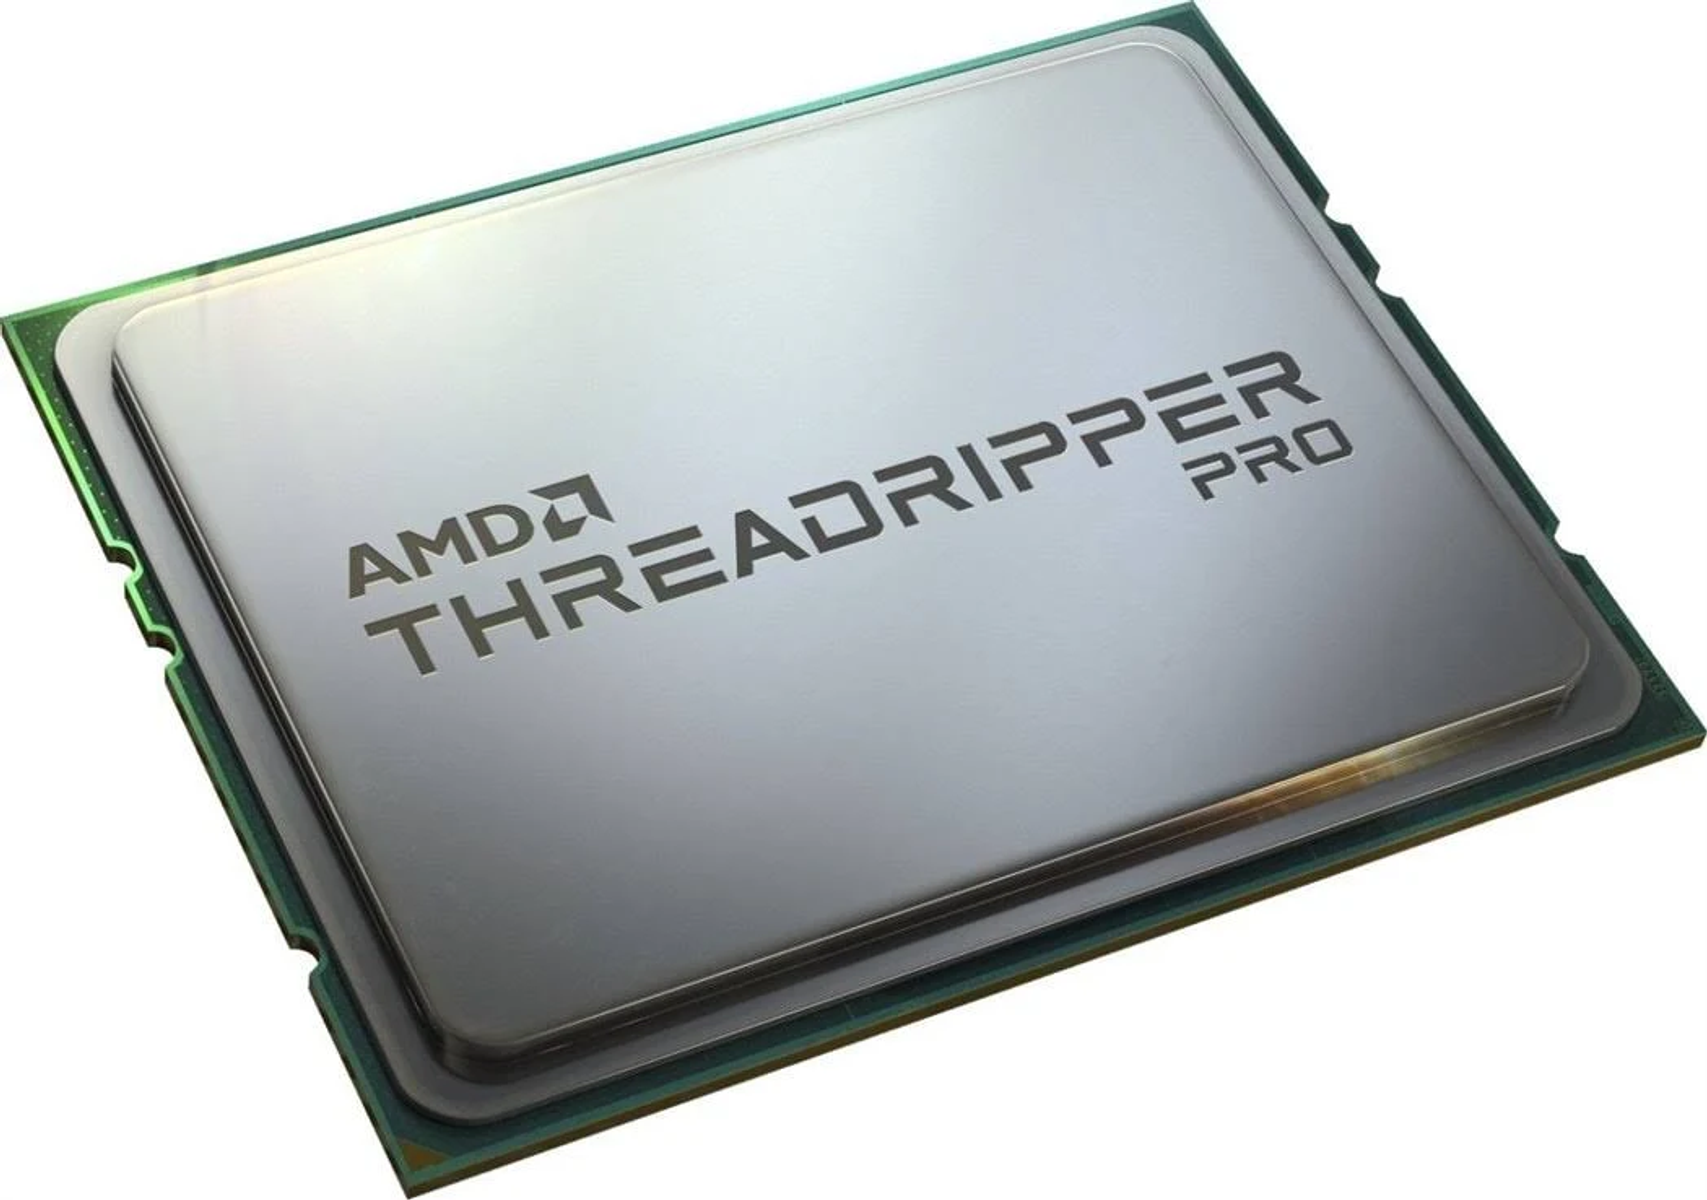 Ryzen Grau AMD PRO 5965WX Threadripper Prozessor,